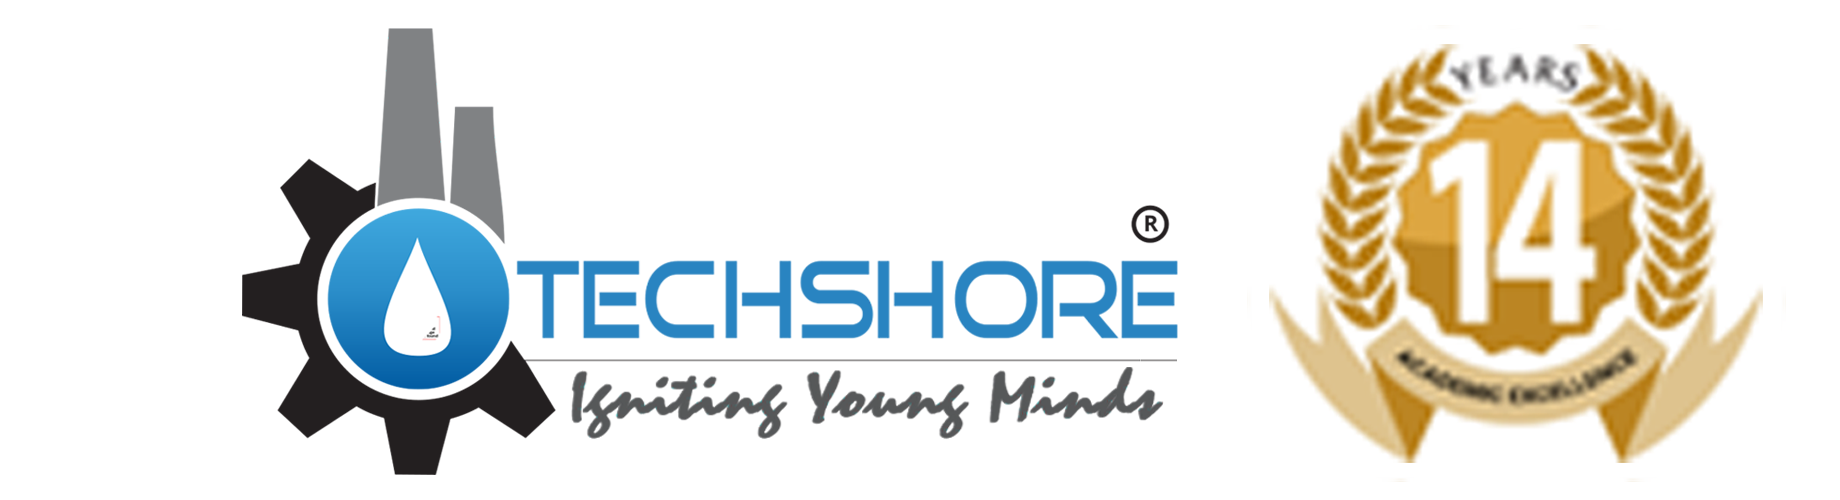 Techshore new logo